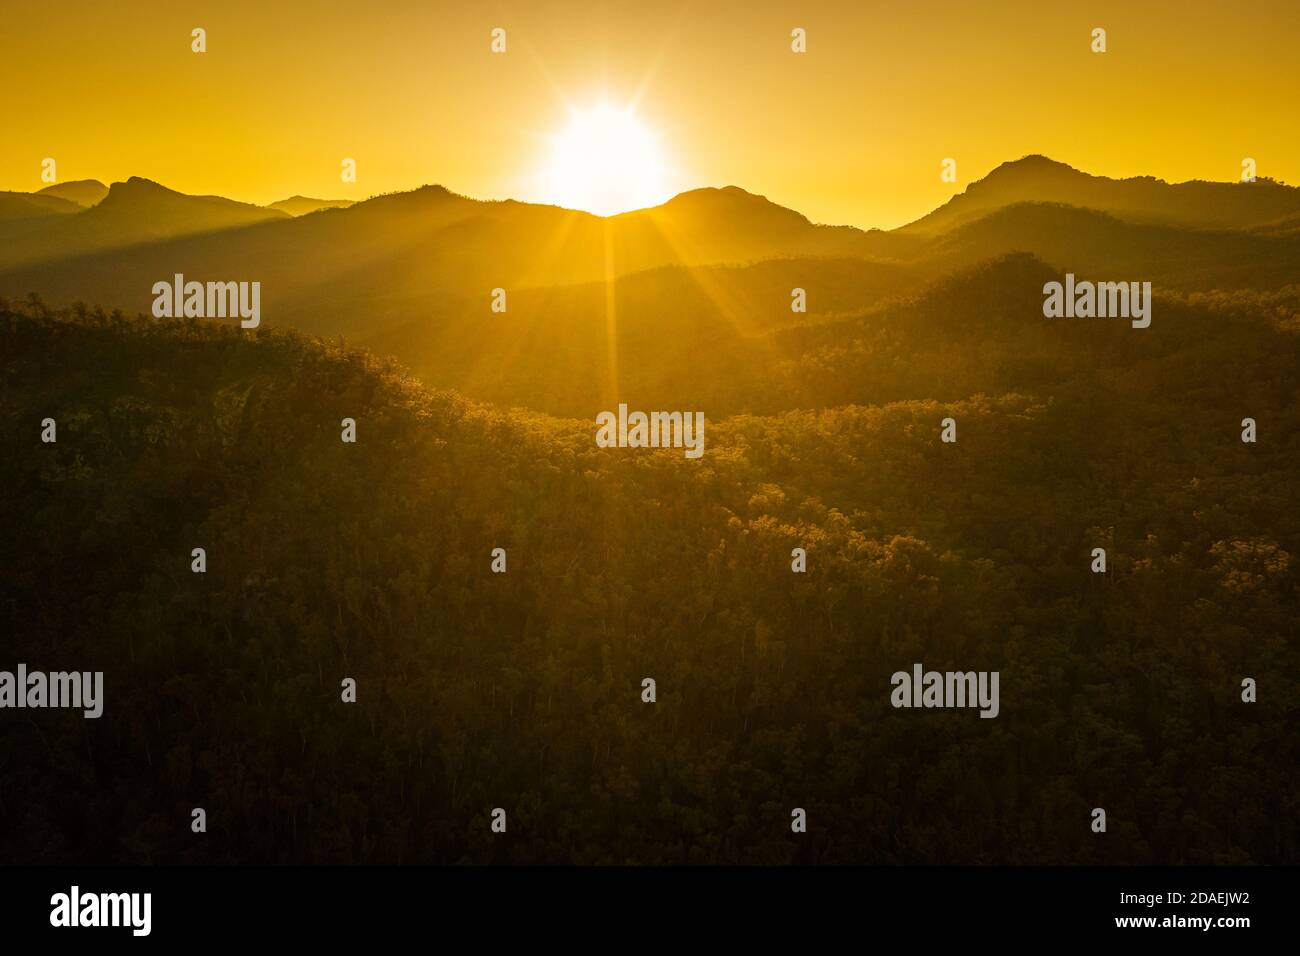 Sunrise over the amazing mountains of the Warrumbungles. Stock Photo